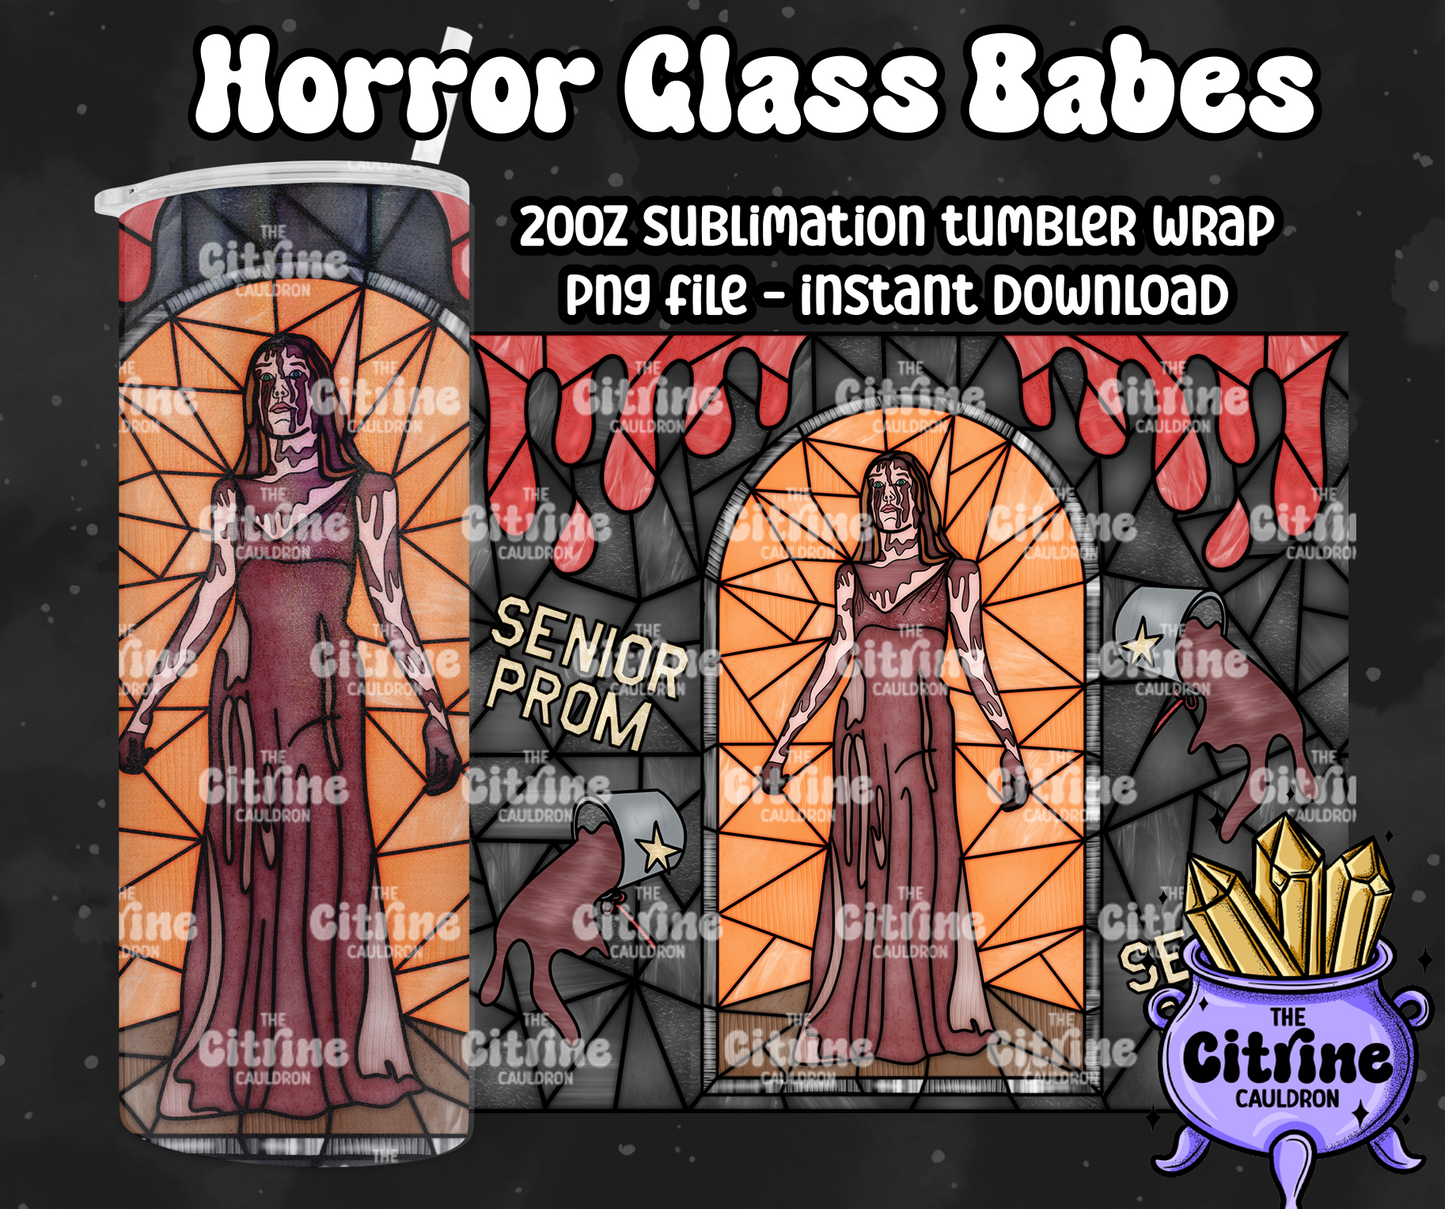 Horror Glass Babes - PNG Wrap for Sublimation 20oz Tumbler